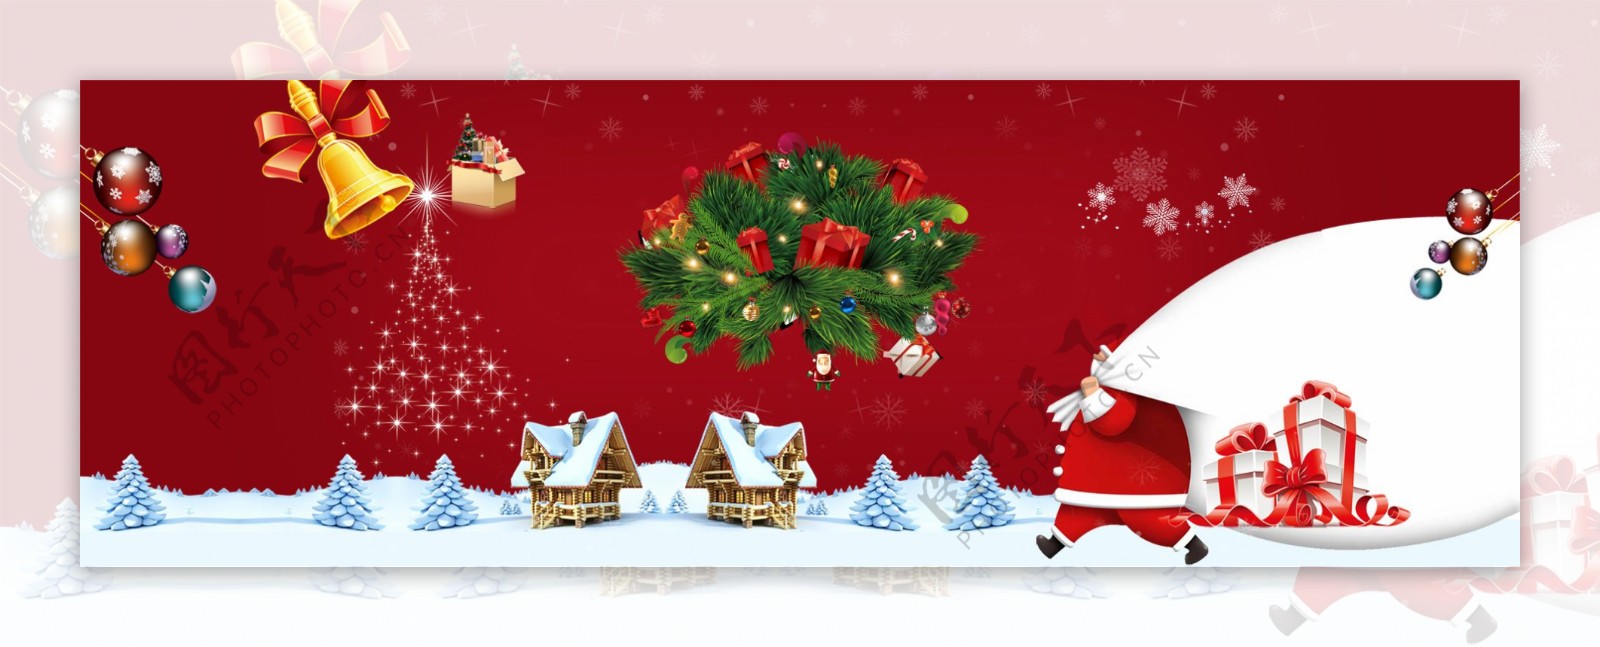 圣诞节Banner背景模板